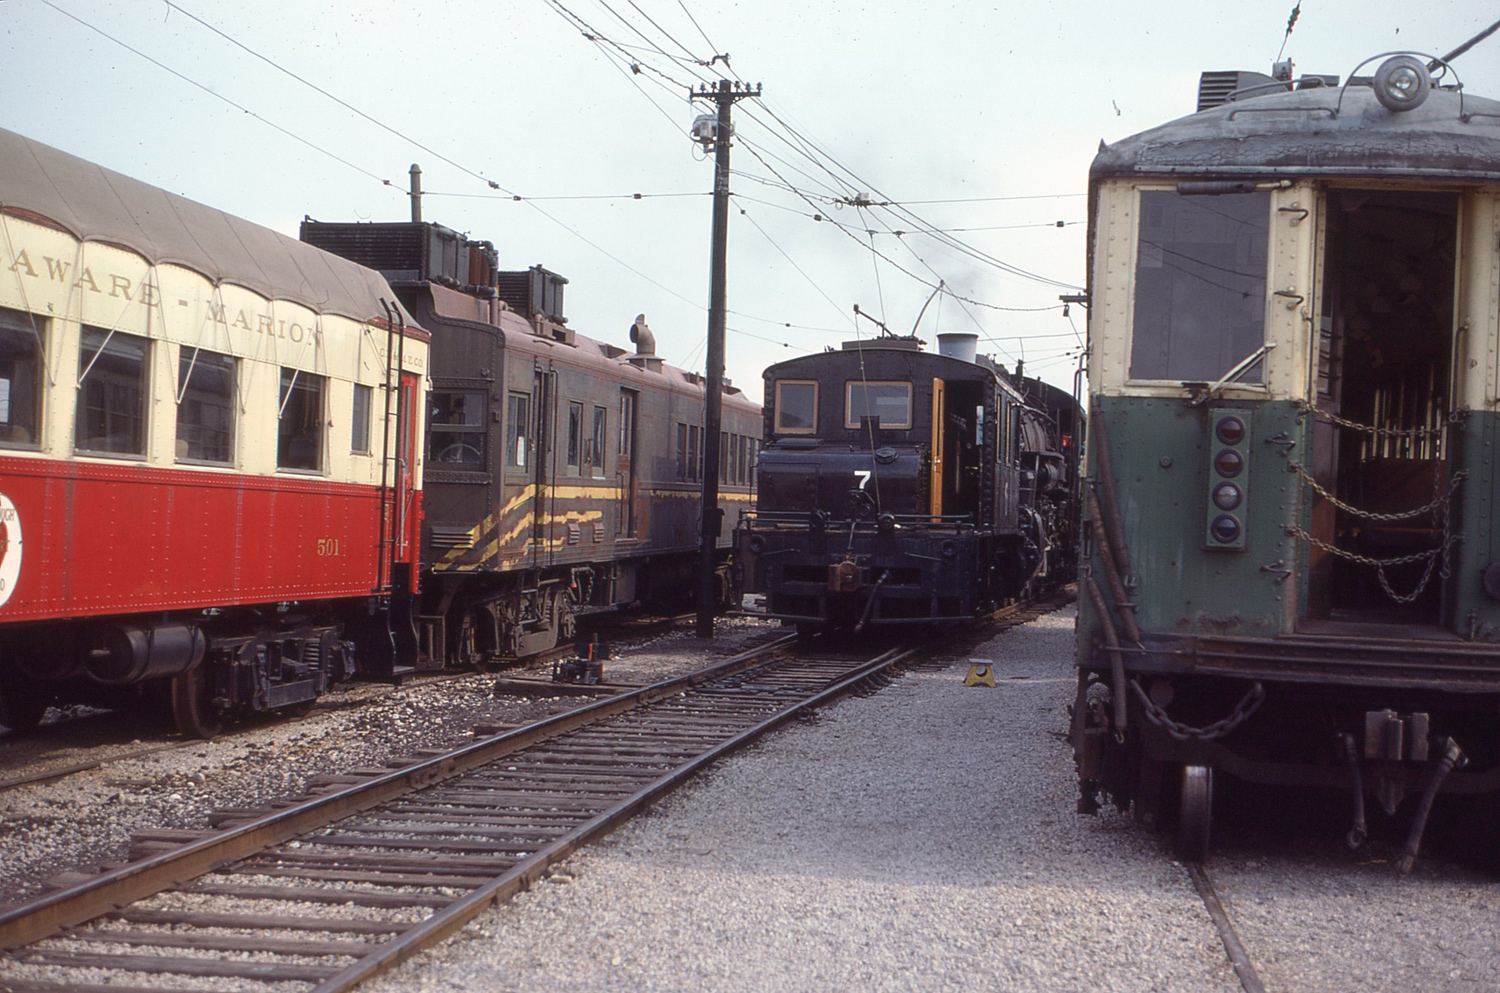 Worthington, Baldwin-Westinghouse locomotive # 7